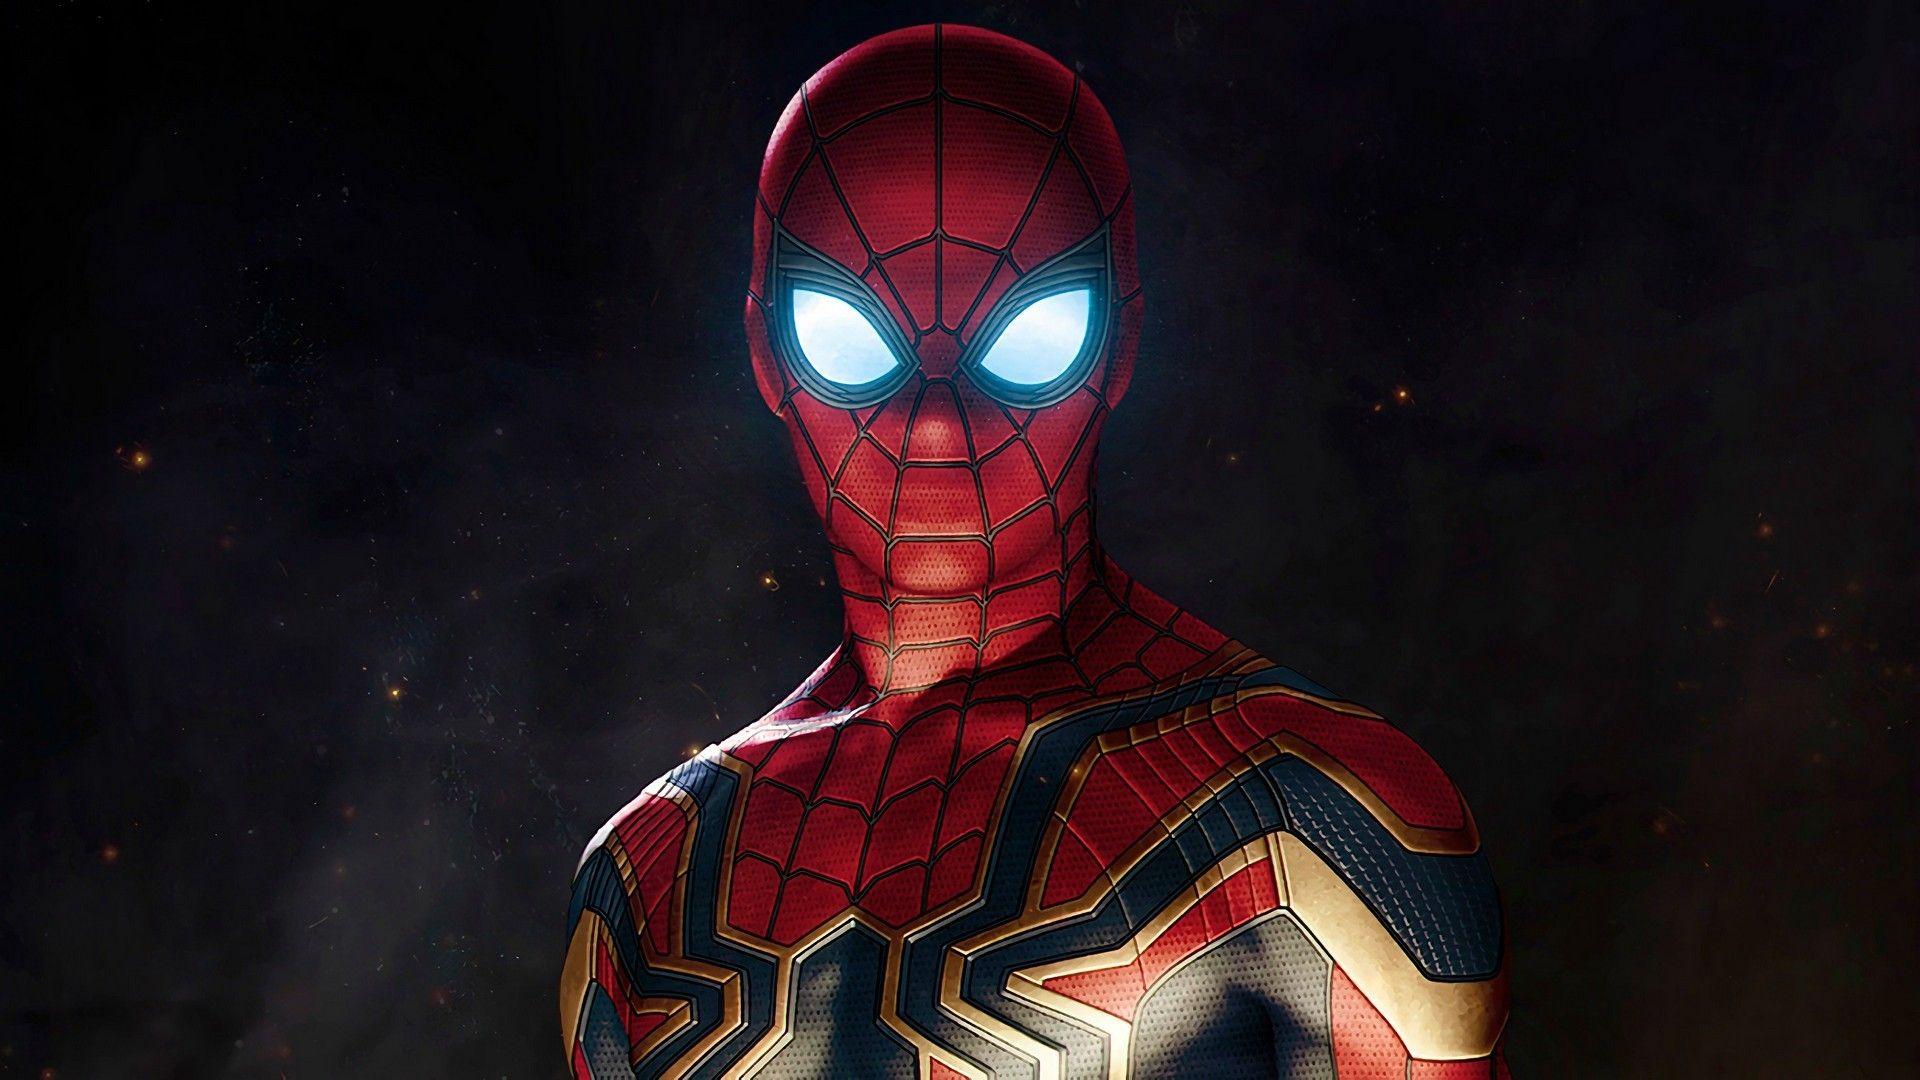 Spiderman Avengers Infinity War Wallpaper. Marvel wallpaper